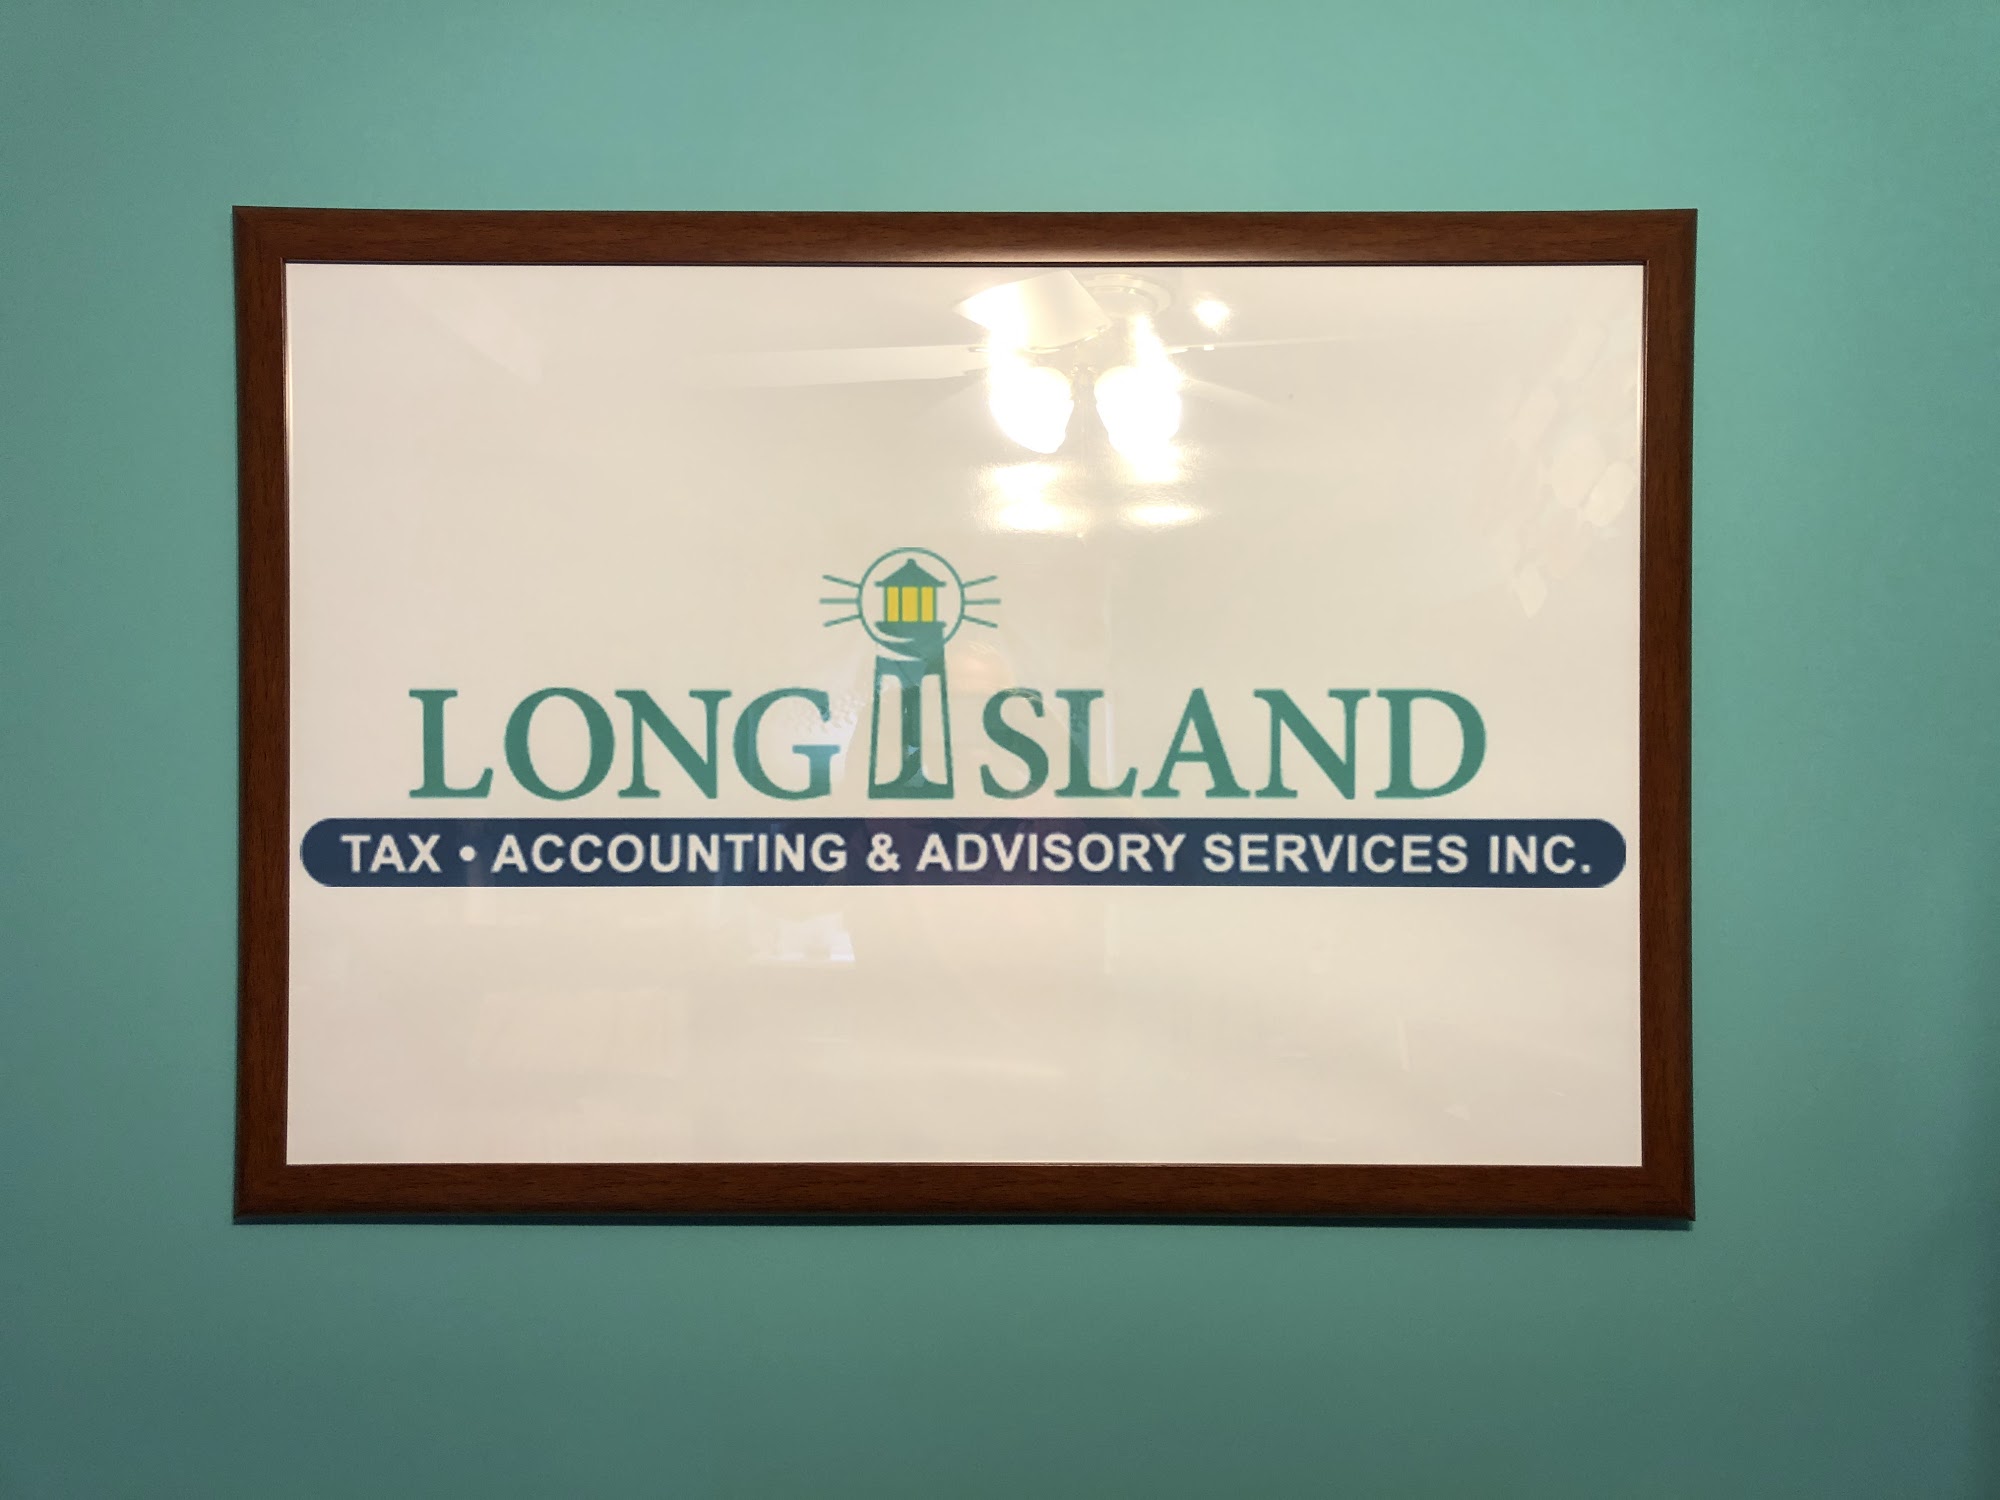 Long Island Tax, Accounting, & Advisory Services Inc.